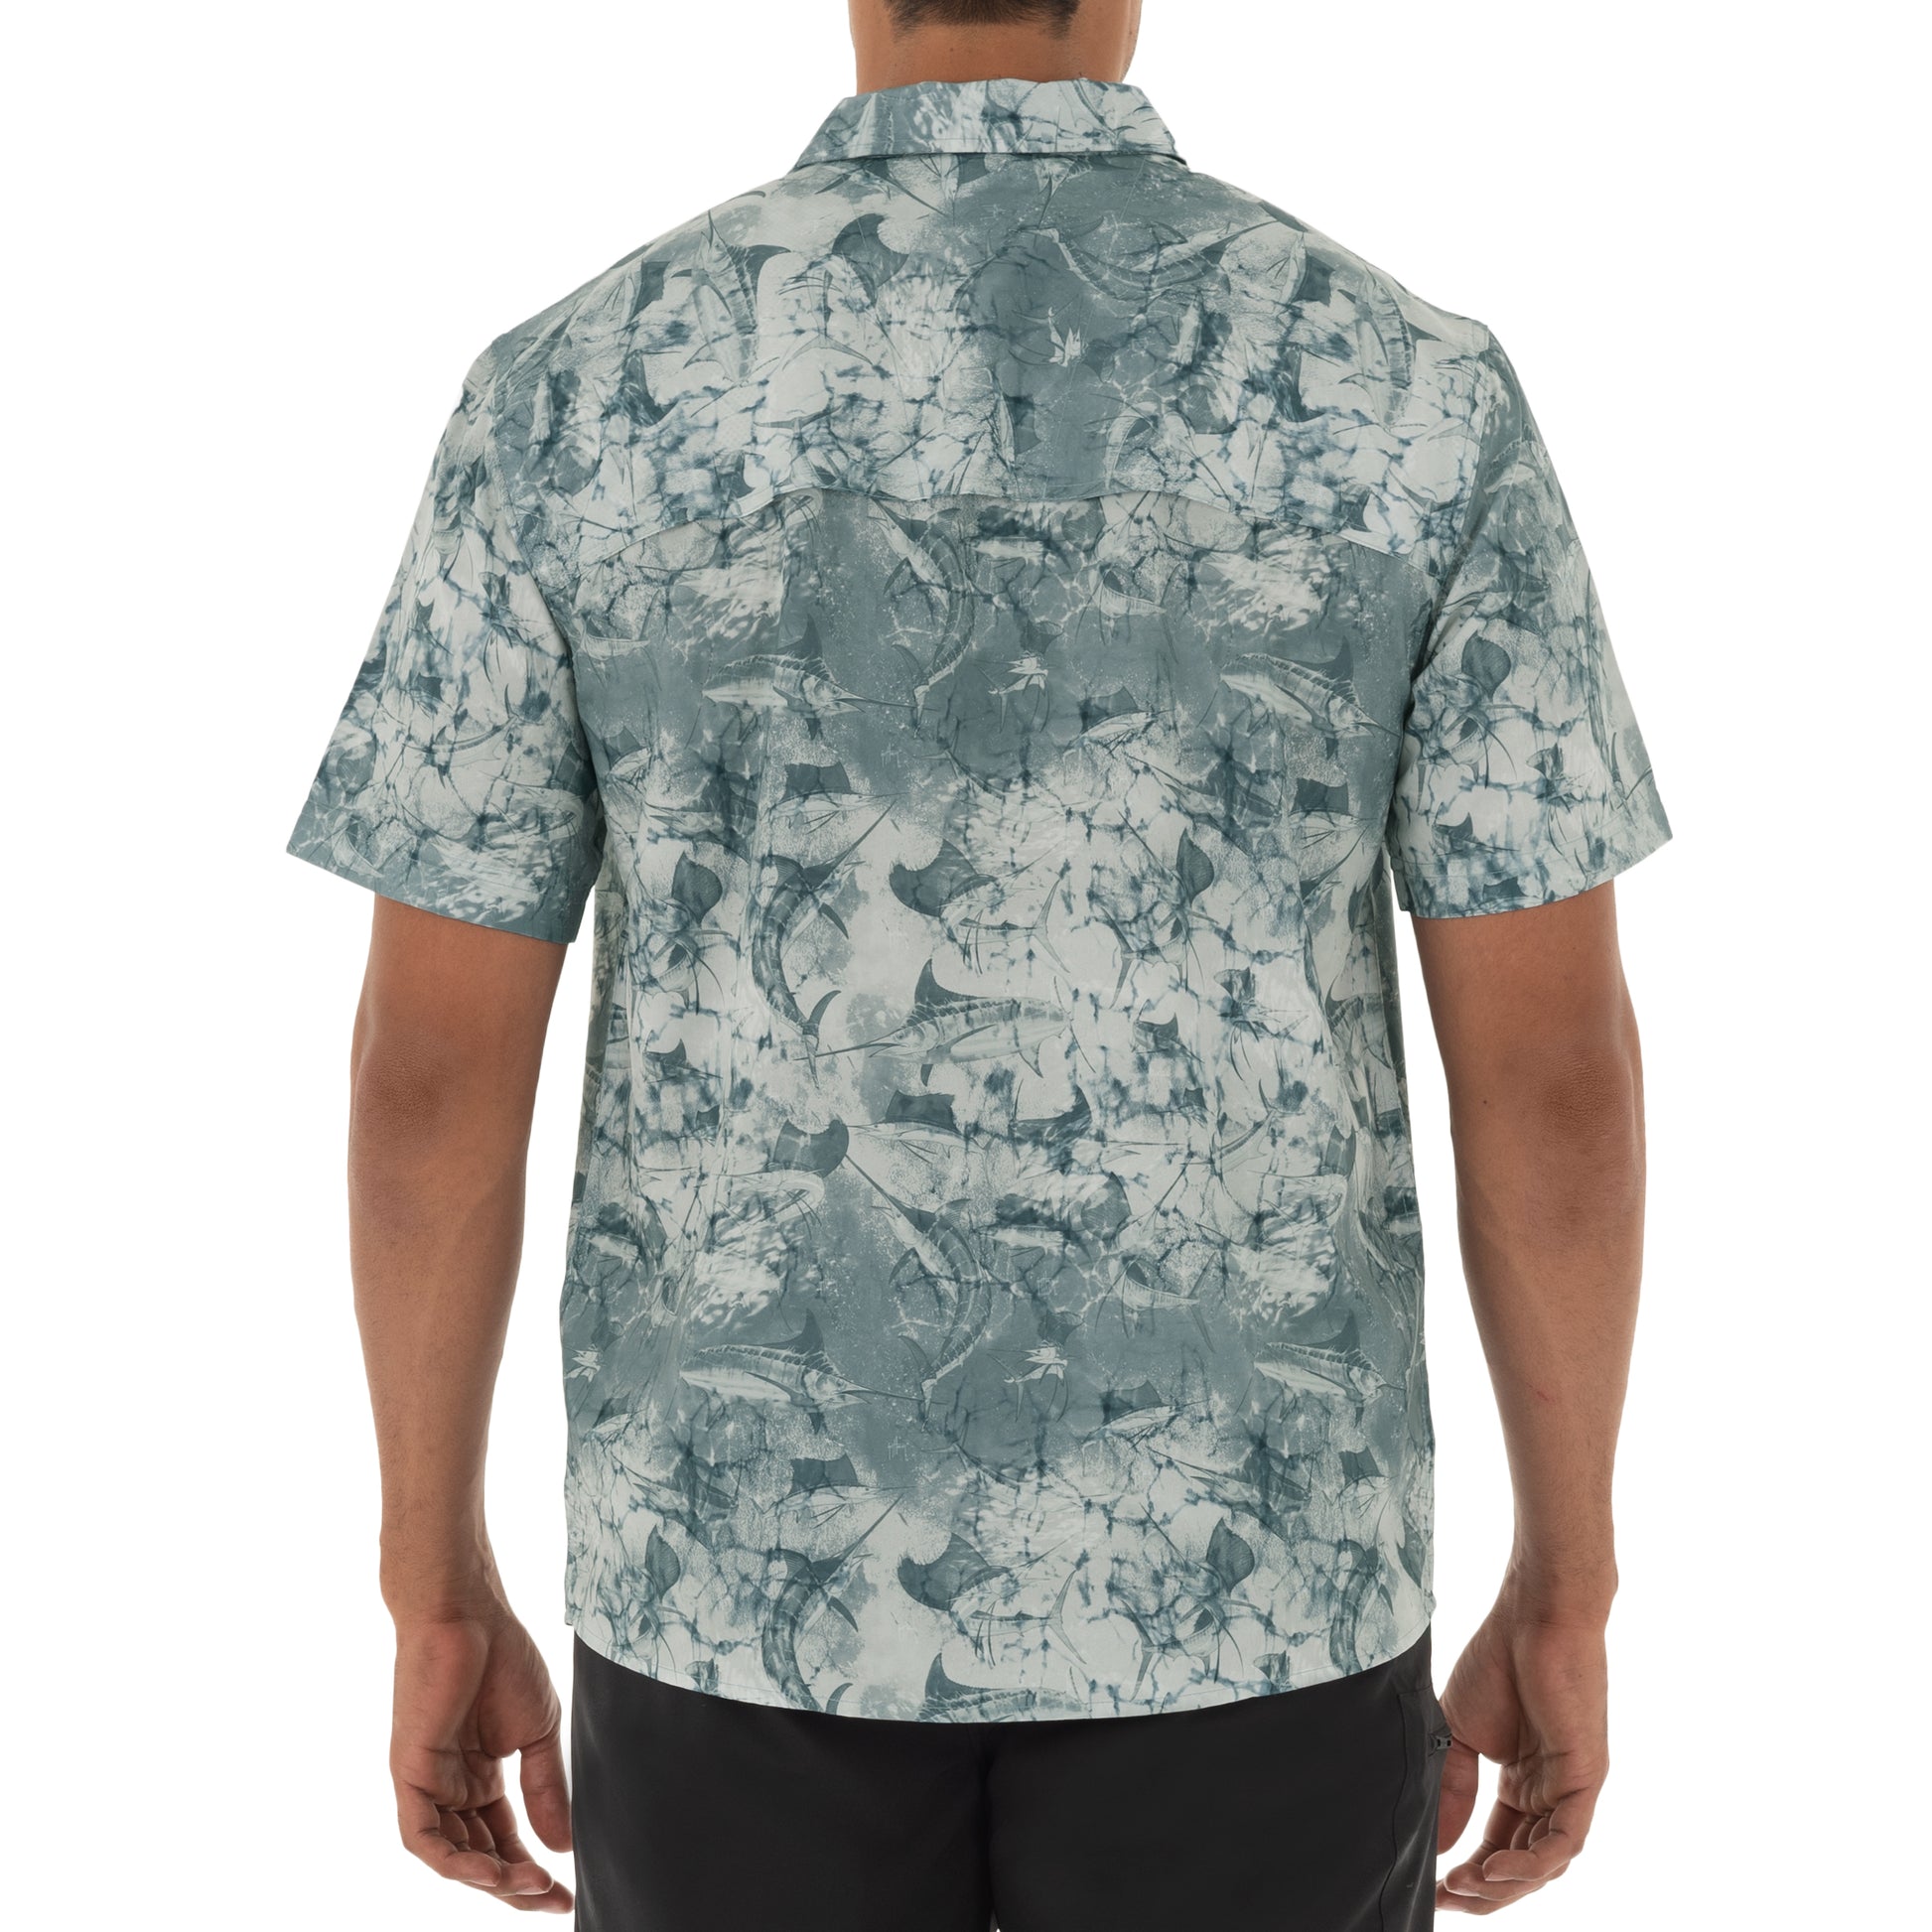 Men's Short Sleeve Printed Grey Fishing Shirt View 6